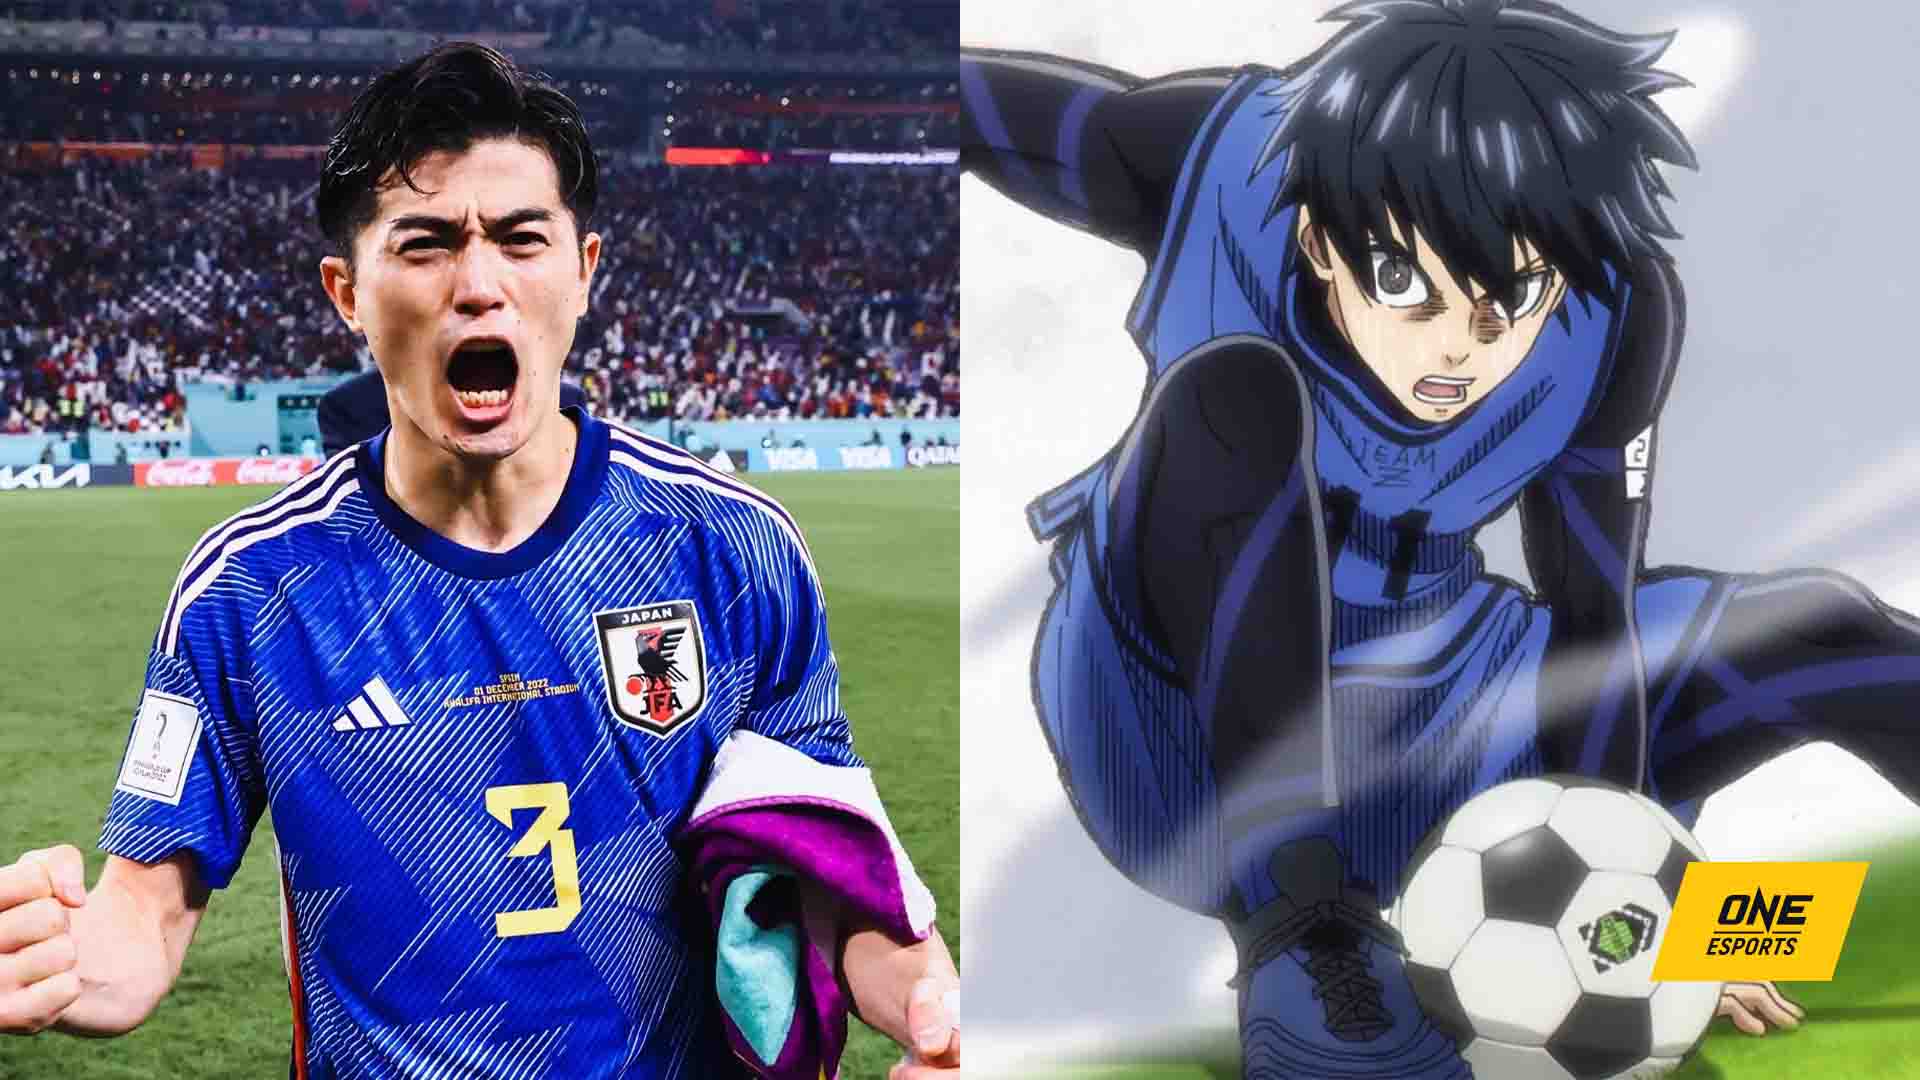 Top 10 Football Anime You Should Watch - Putachi-demhanvico.com.vn